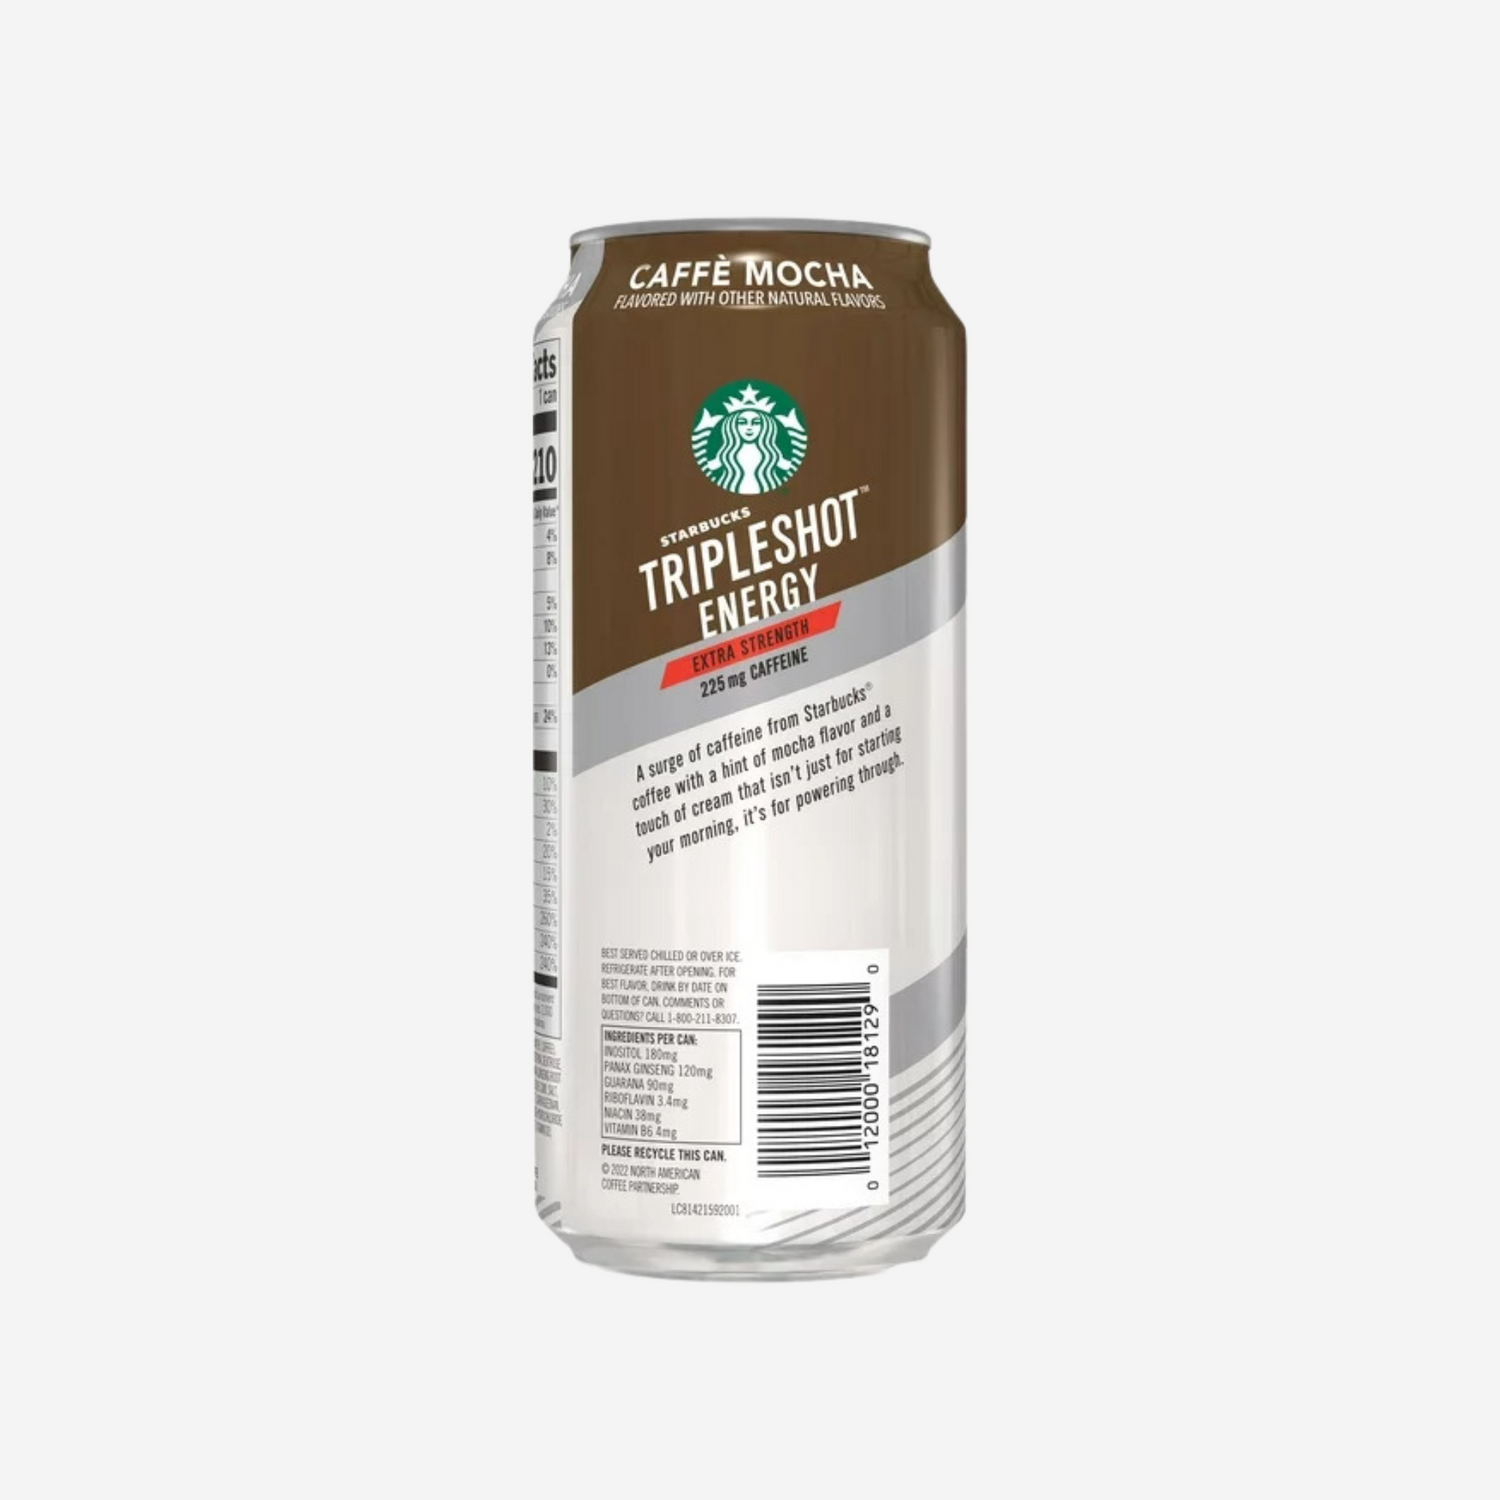 Starbucks Tripleshot Energy Mocha Extra Strength Coffee Energy Drink, 15 fl oz Can